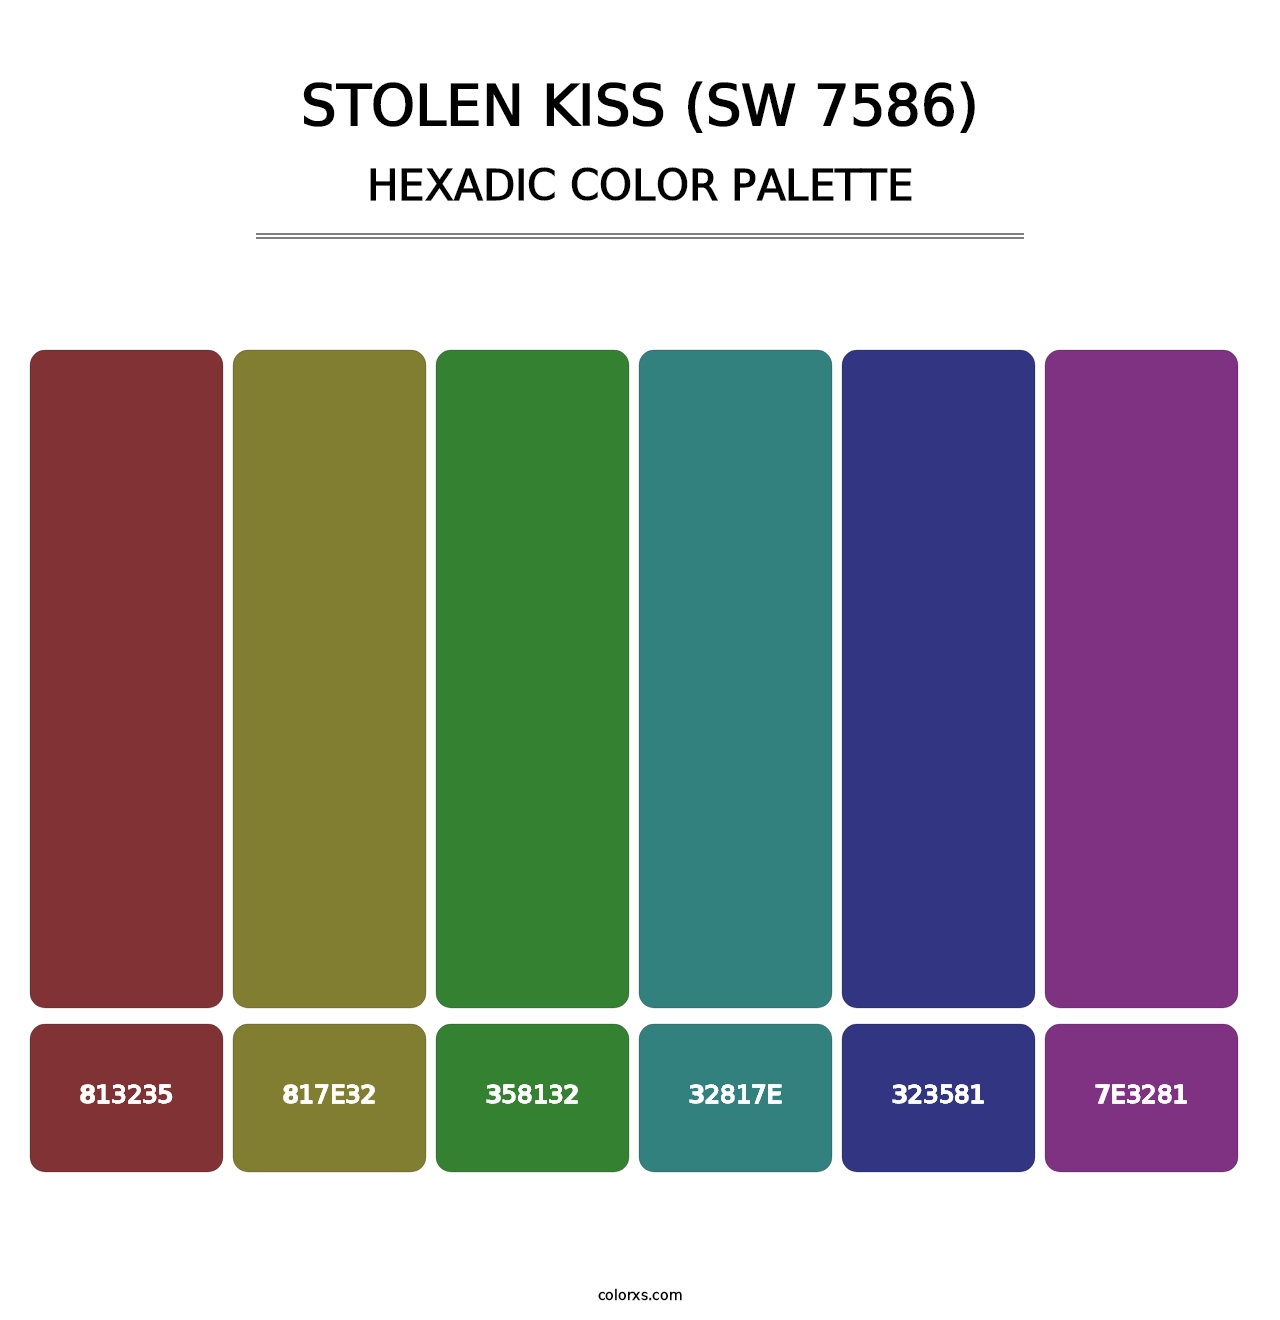 Stolen Kiss (SW 7586) - Hexadic Color Palette